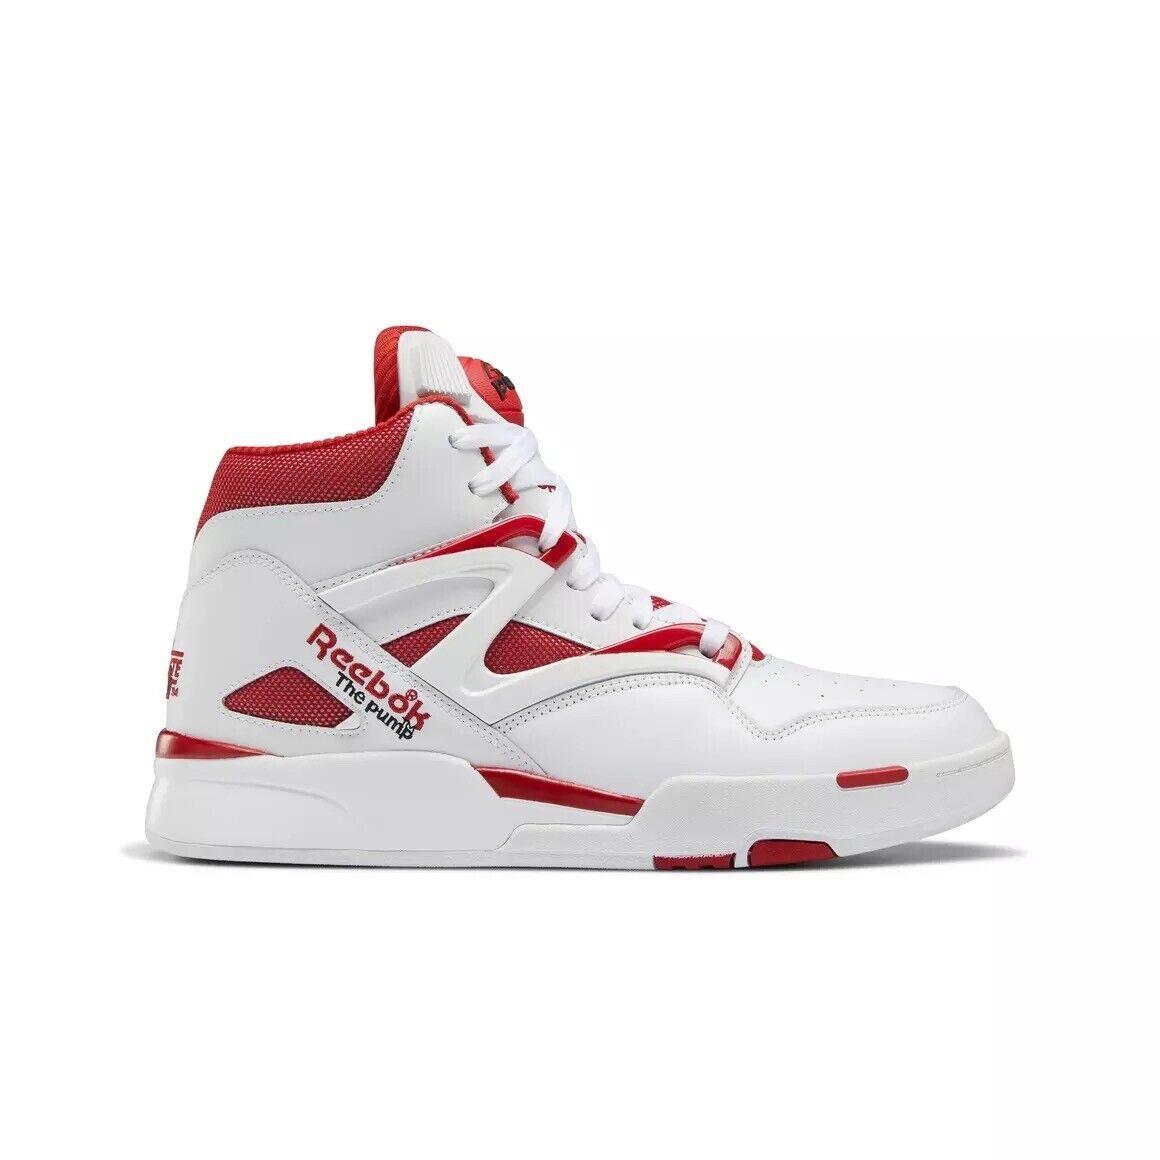 Men Reebok Pump Omni Zone II Basketball Shoes Size 9 White Red Black HQ1008 - White